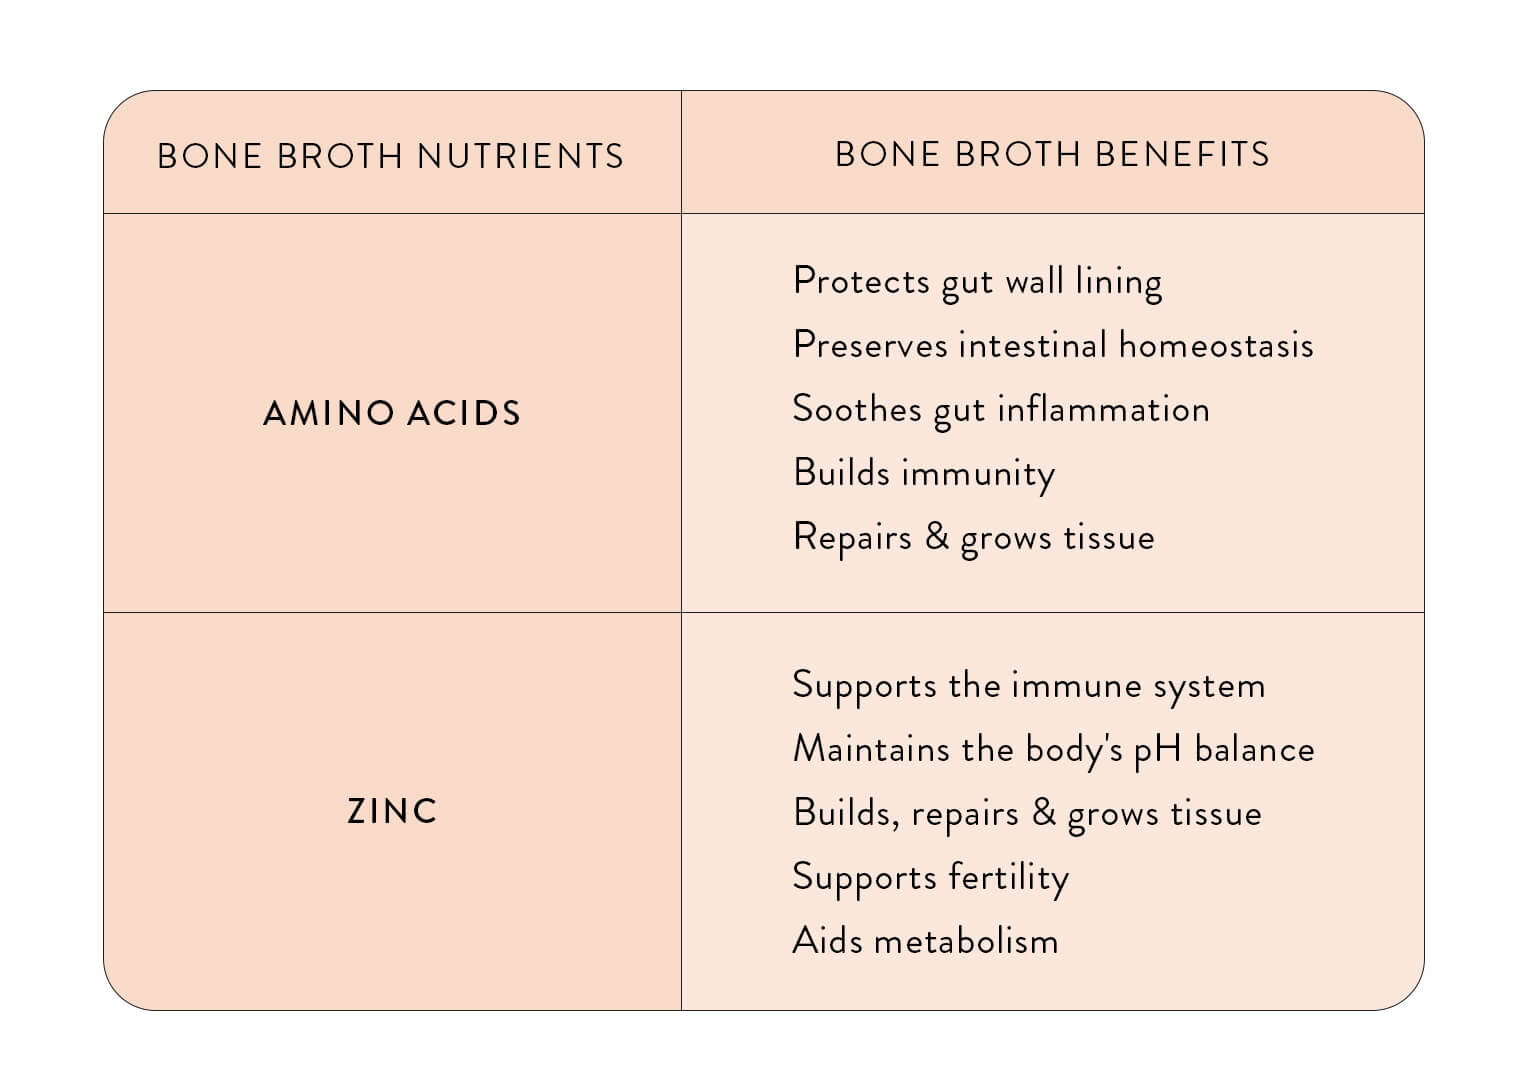 Bone broth nutrients Table